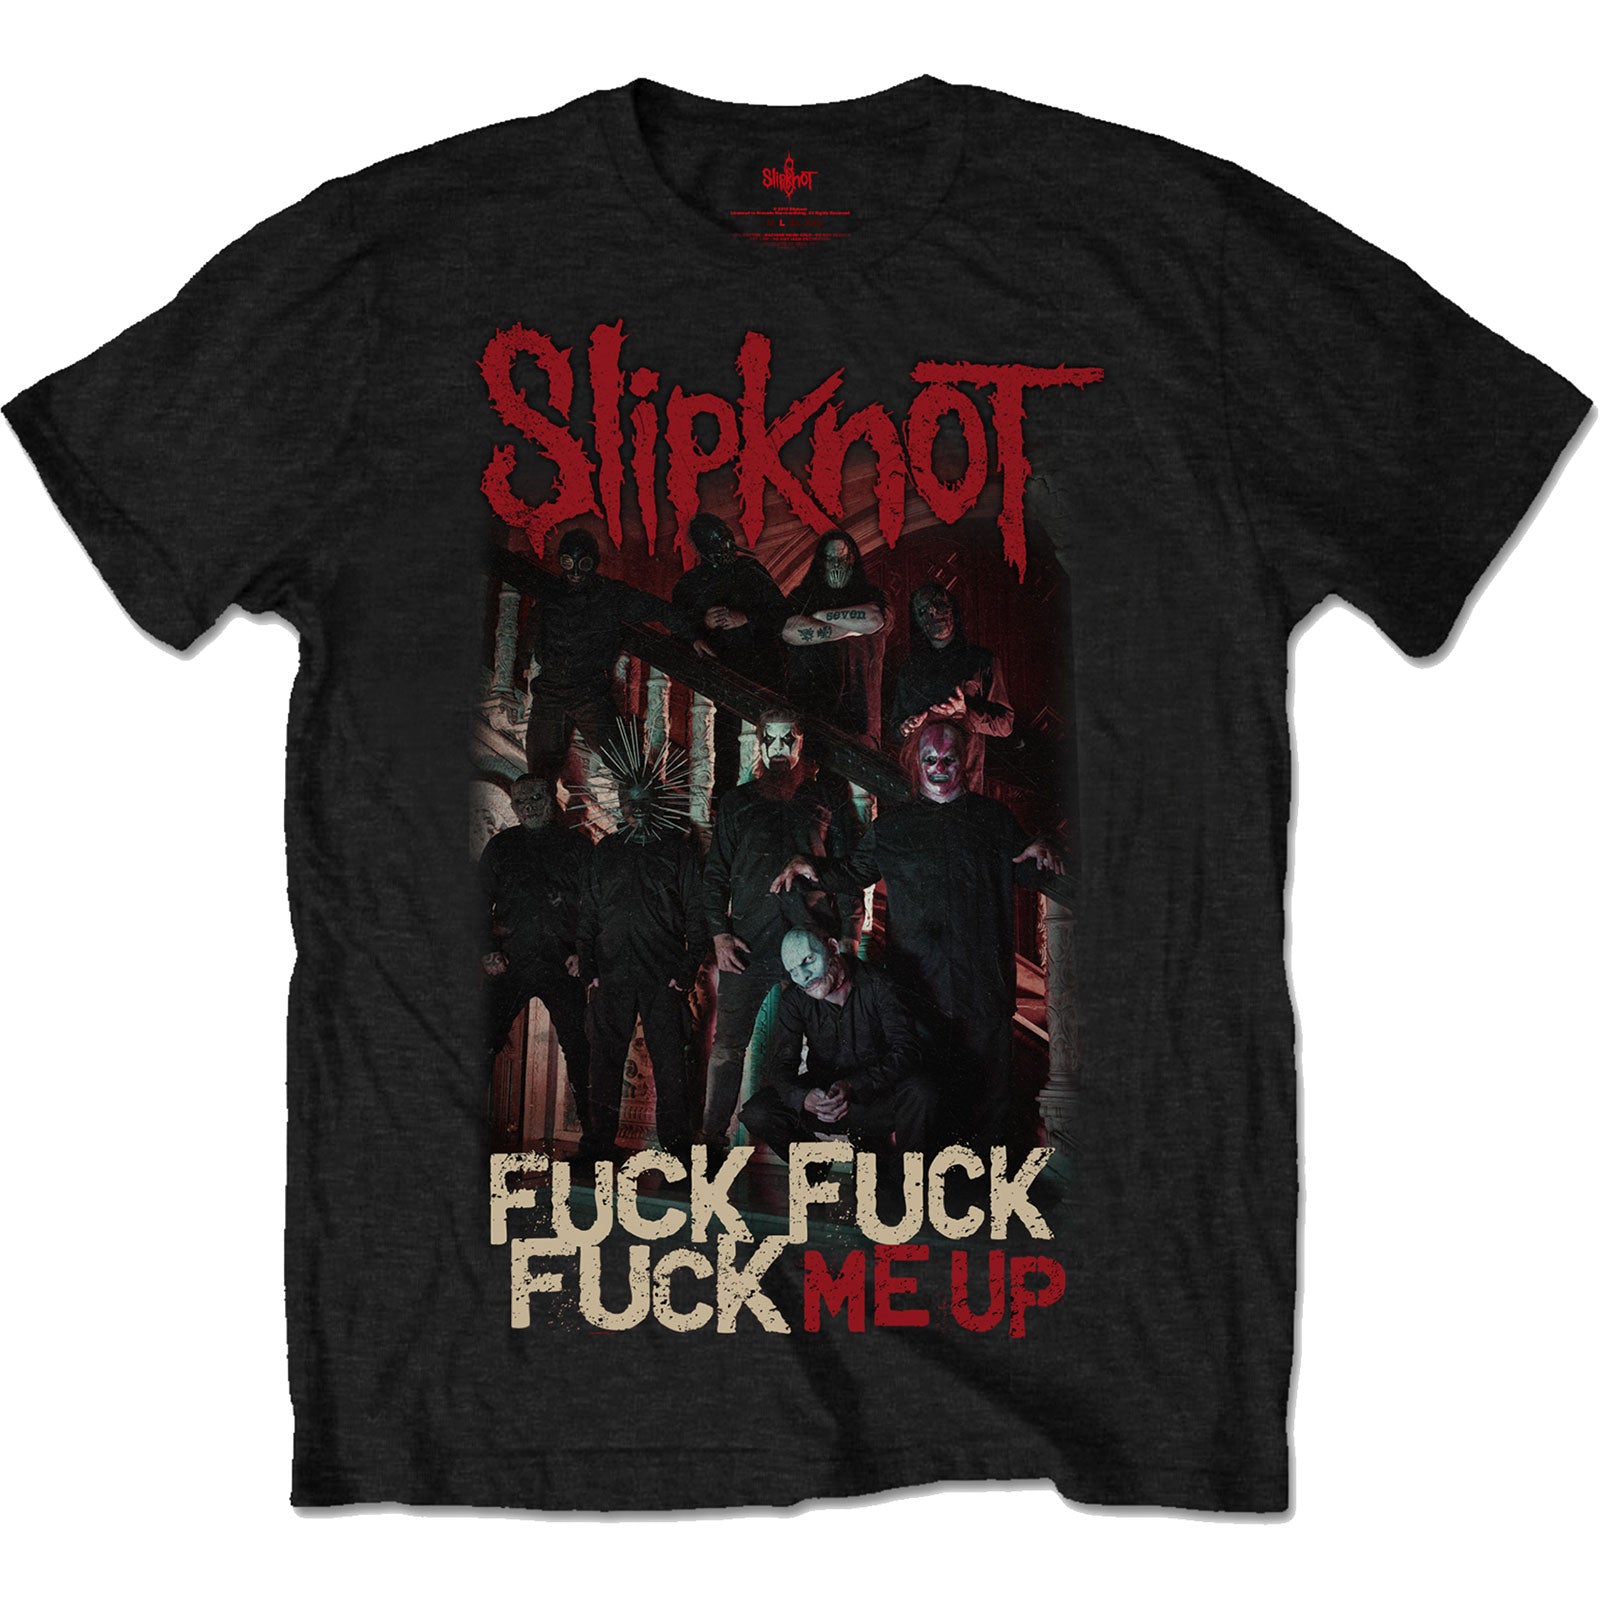 Slipknot "Fuck Me Up" T shirt